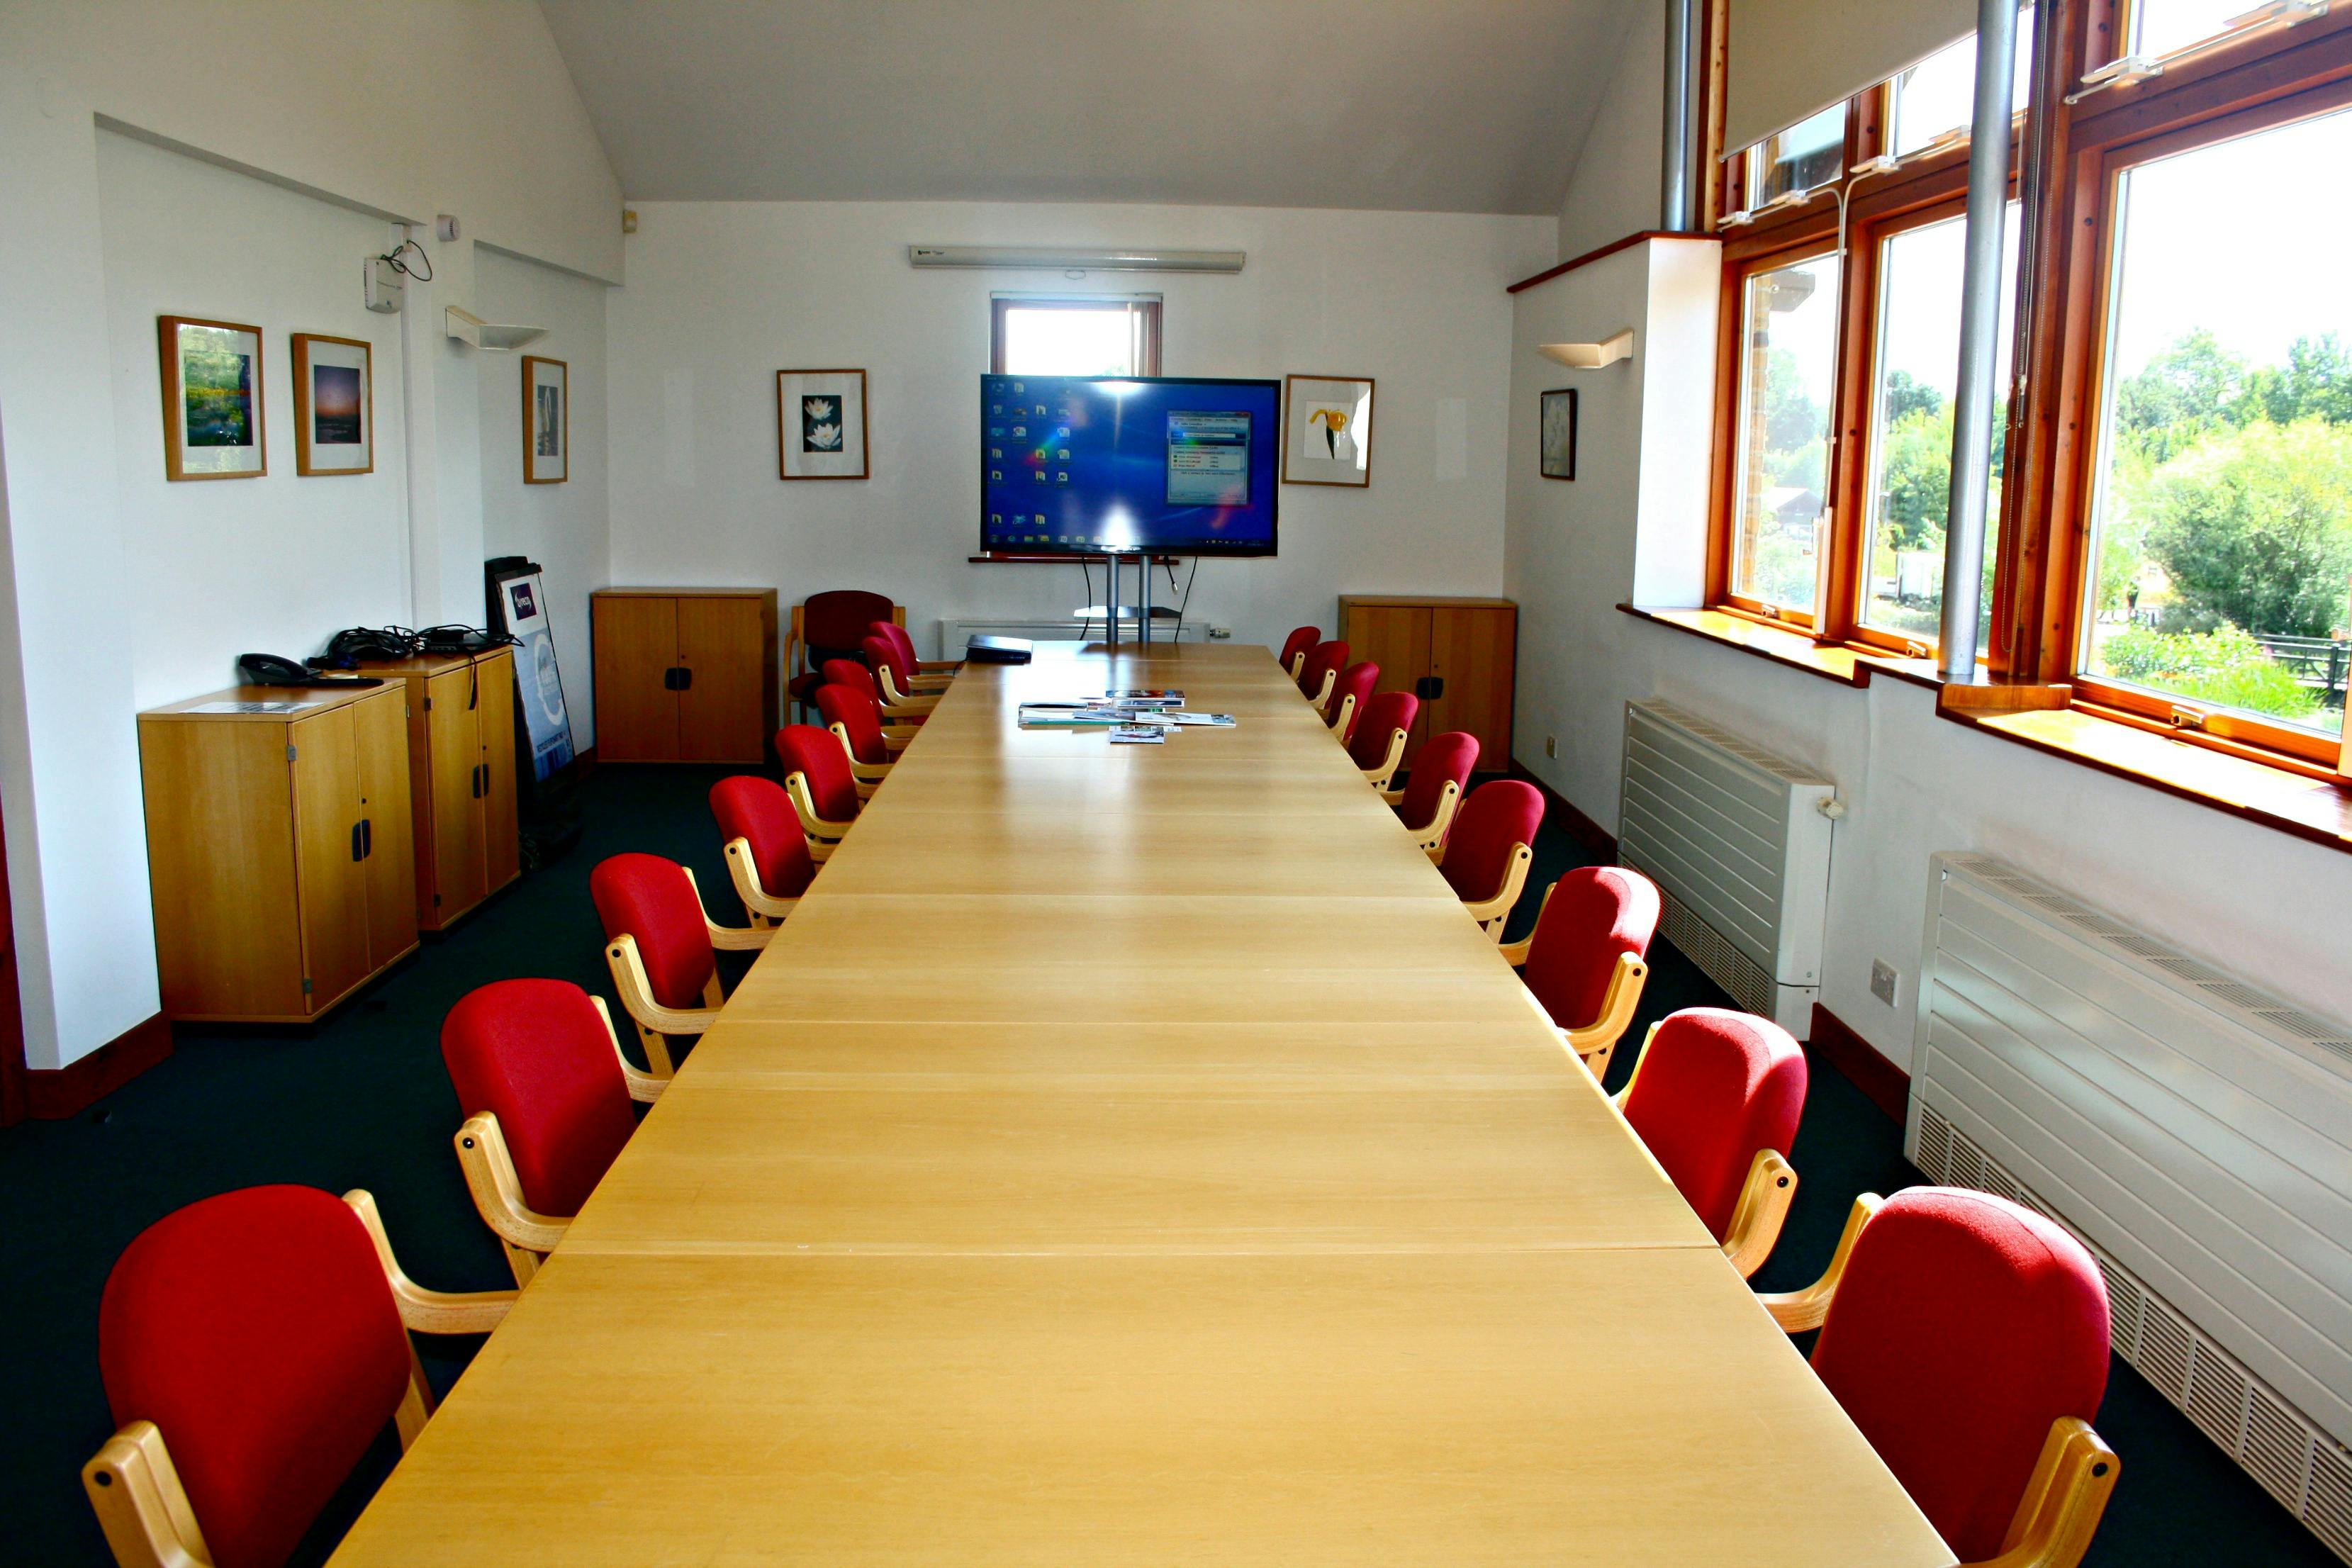 WWT London Wetland Centre - Meeting Room image 4